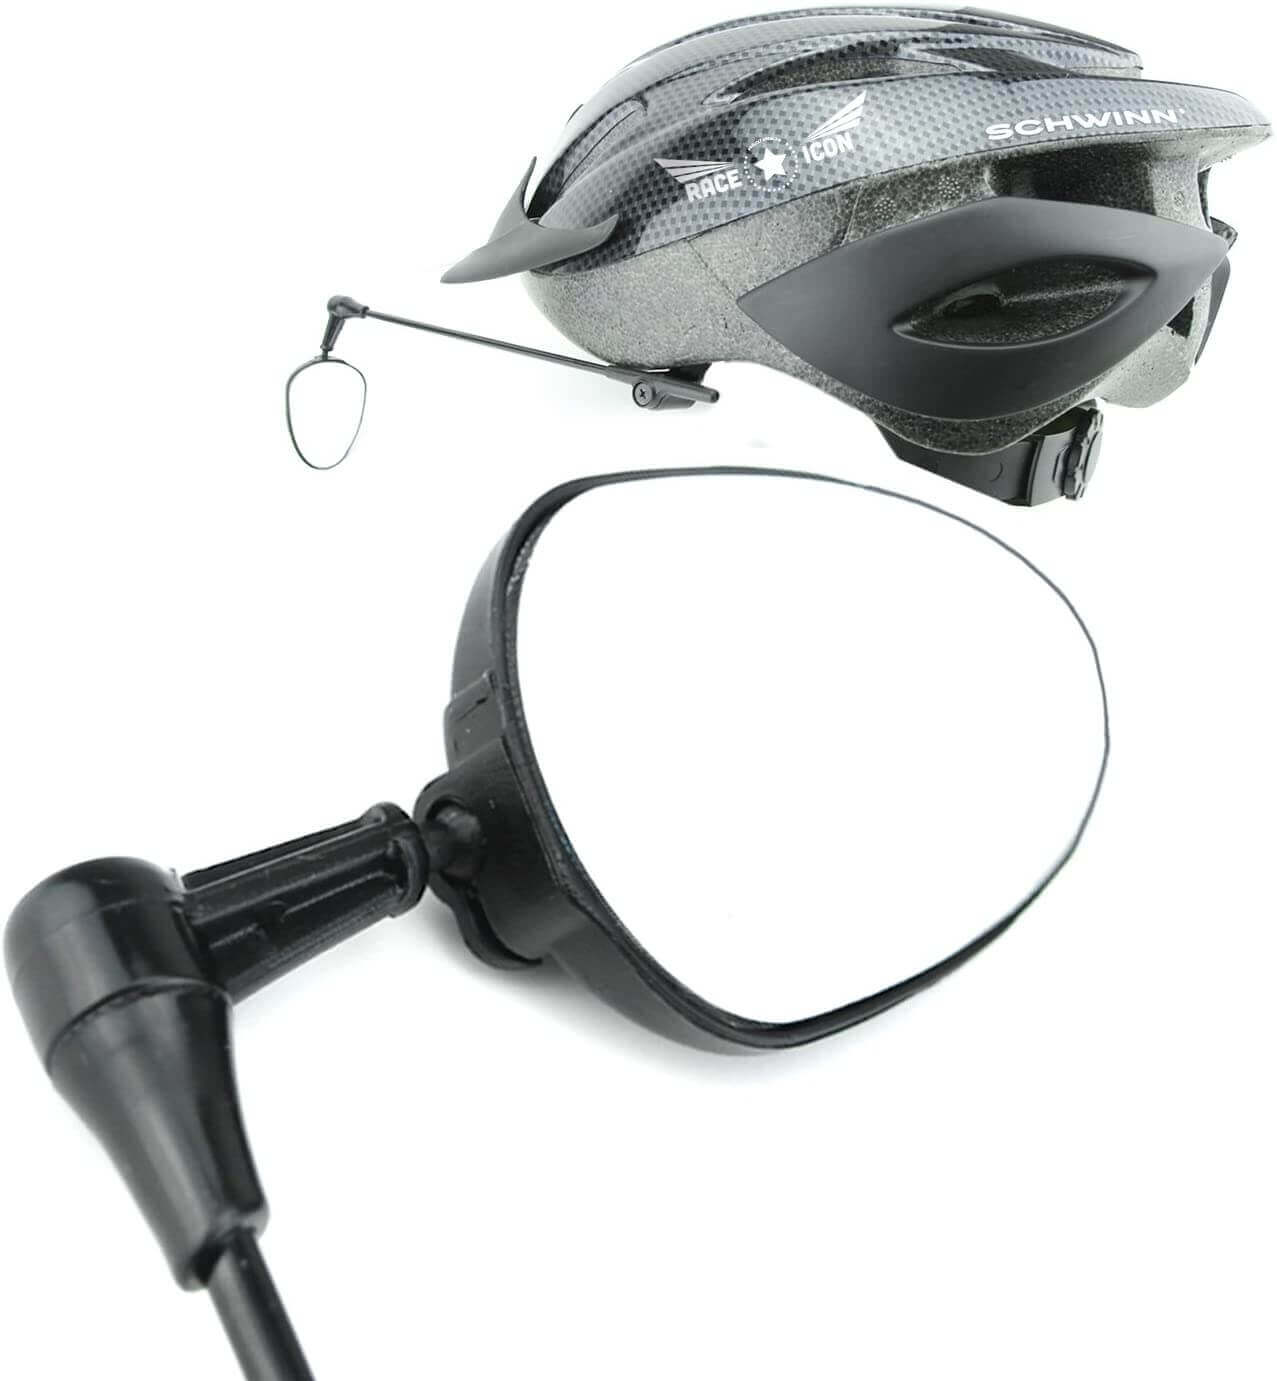 Race-Icon-Bike-Helmet-Mirror